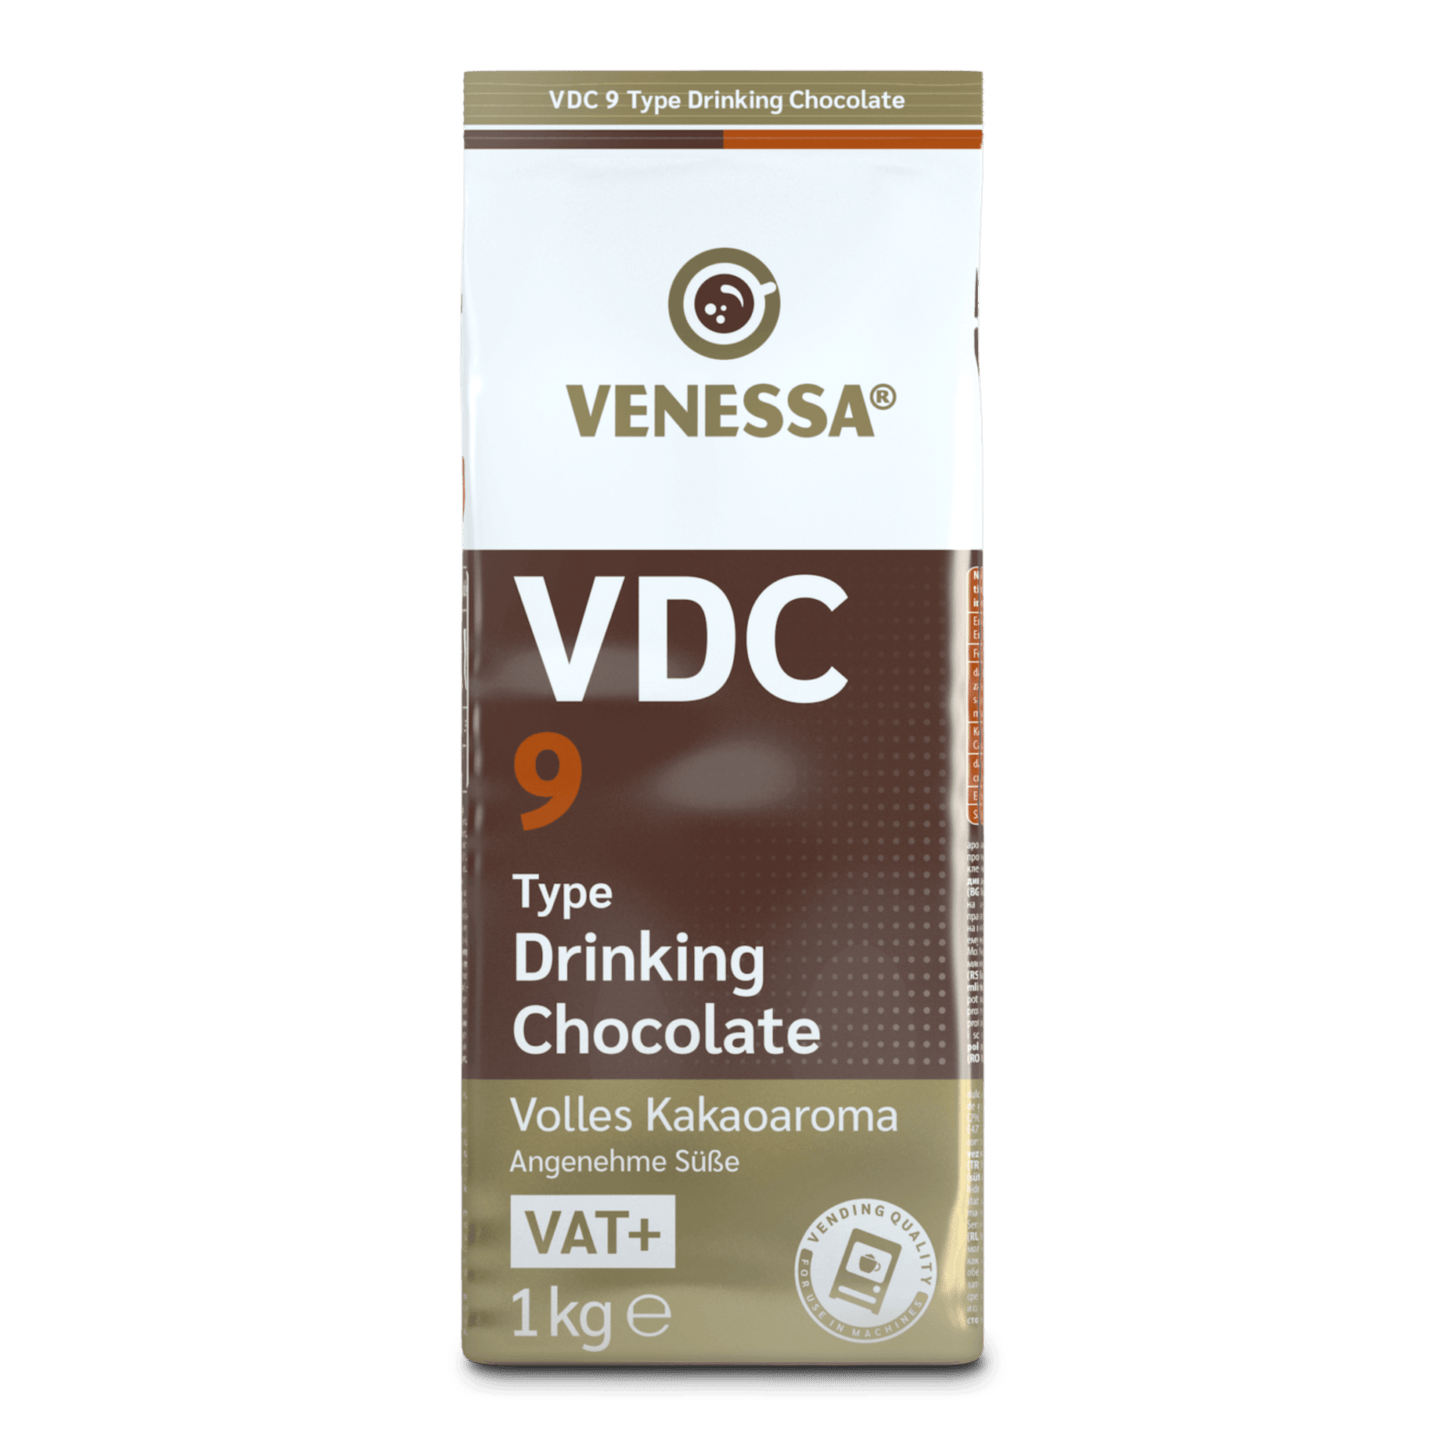 Drinking Chocolate VDC 9